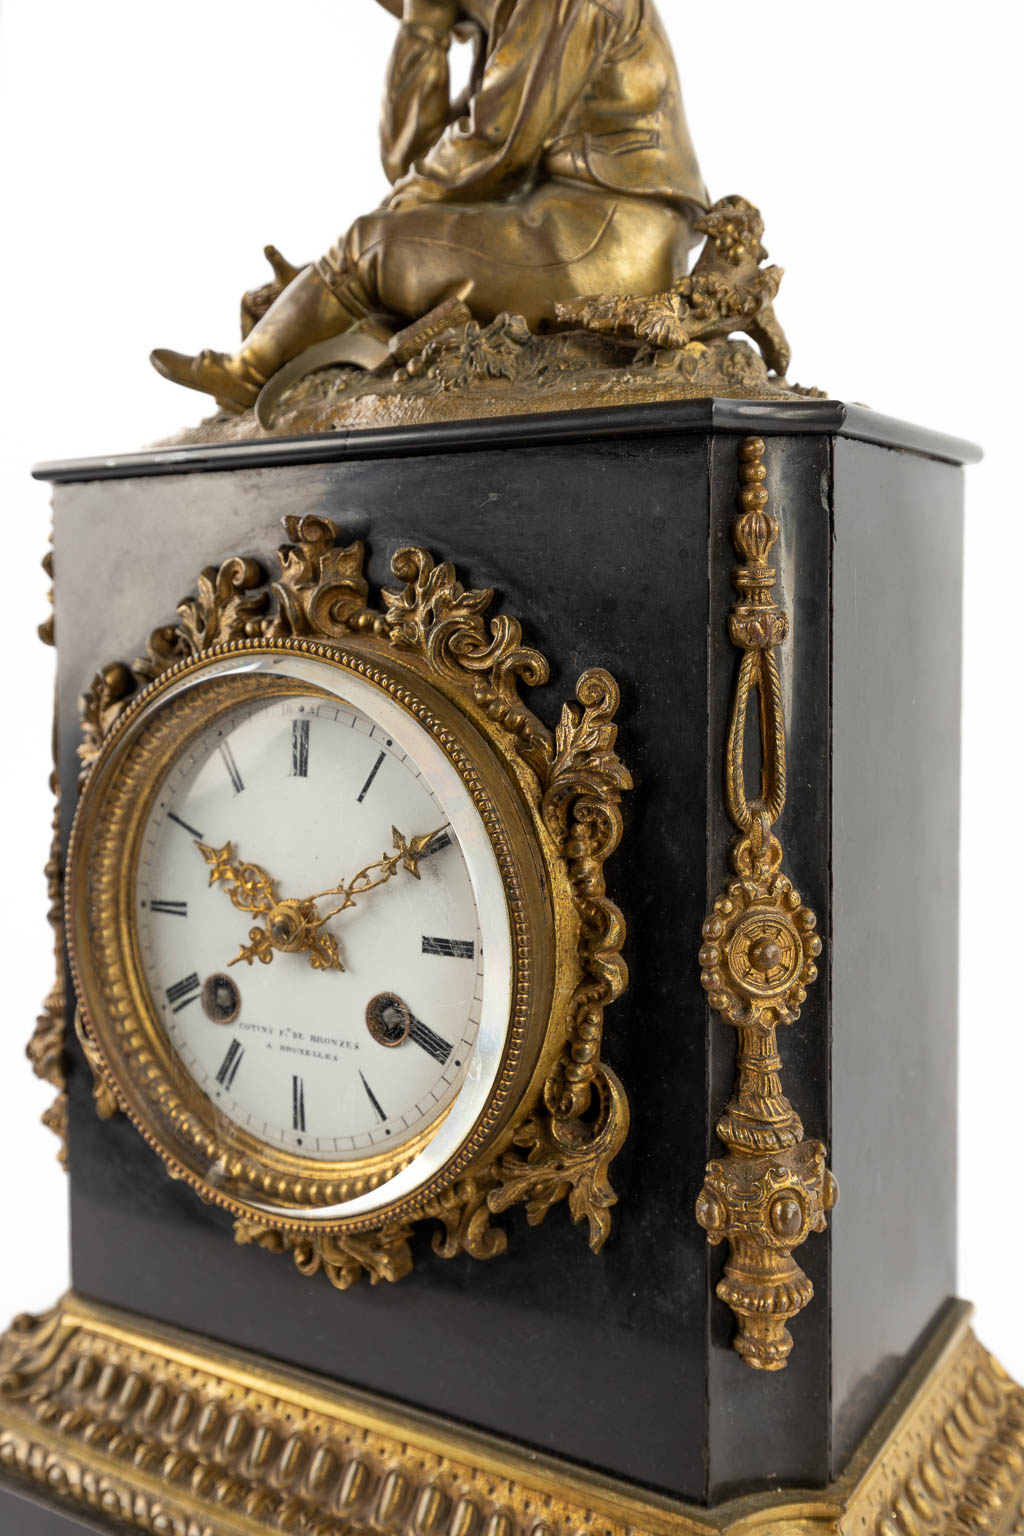 A mantle clock, black marble with a bronze figurine. 19th C. (D:12 x W:22 x H:41 cm)